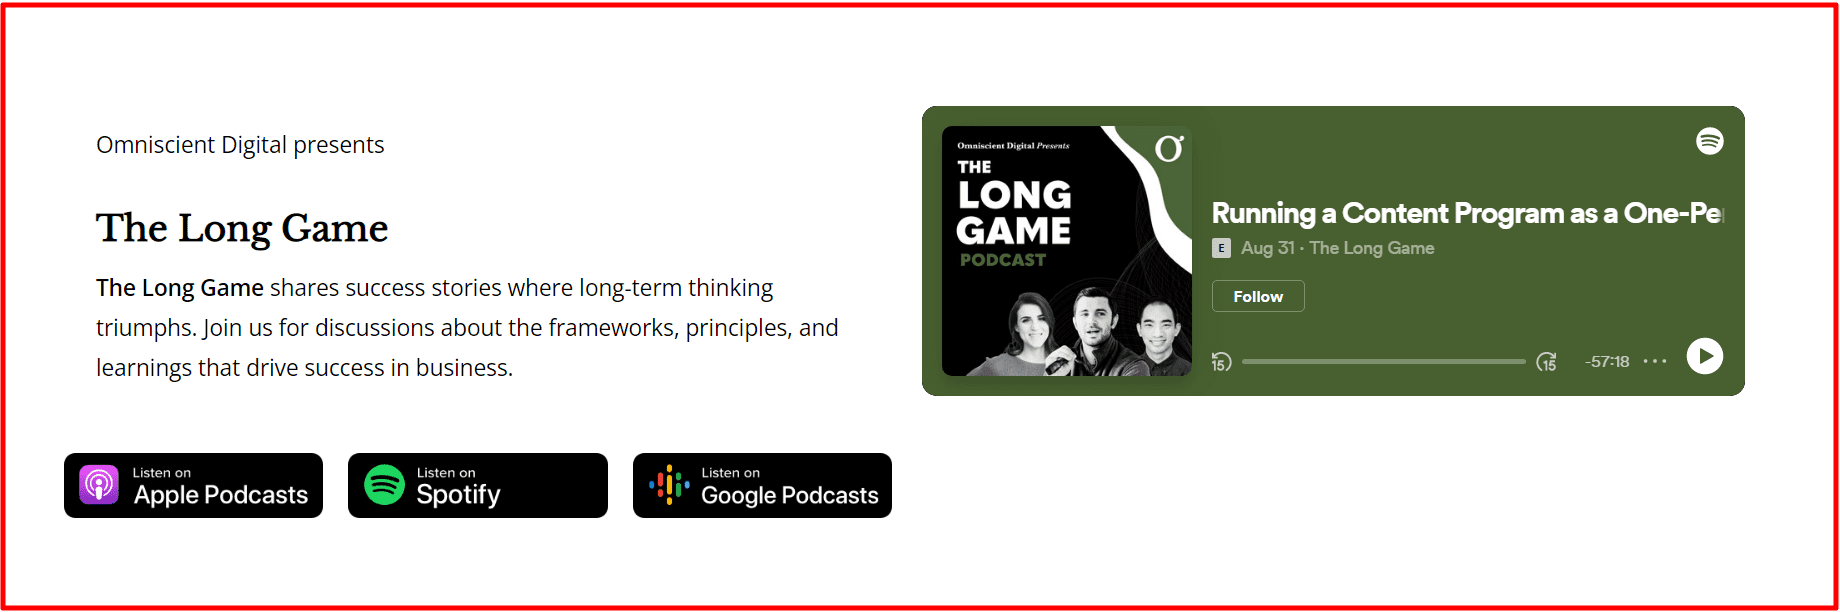 The Long Game - Omniscient Digital